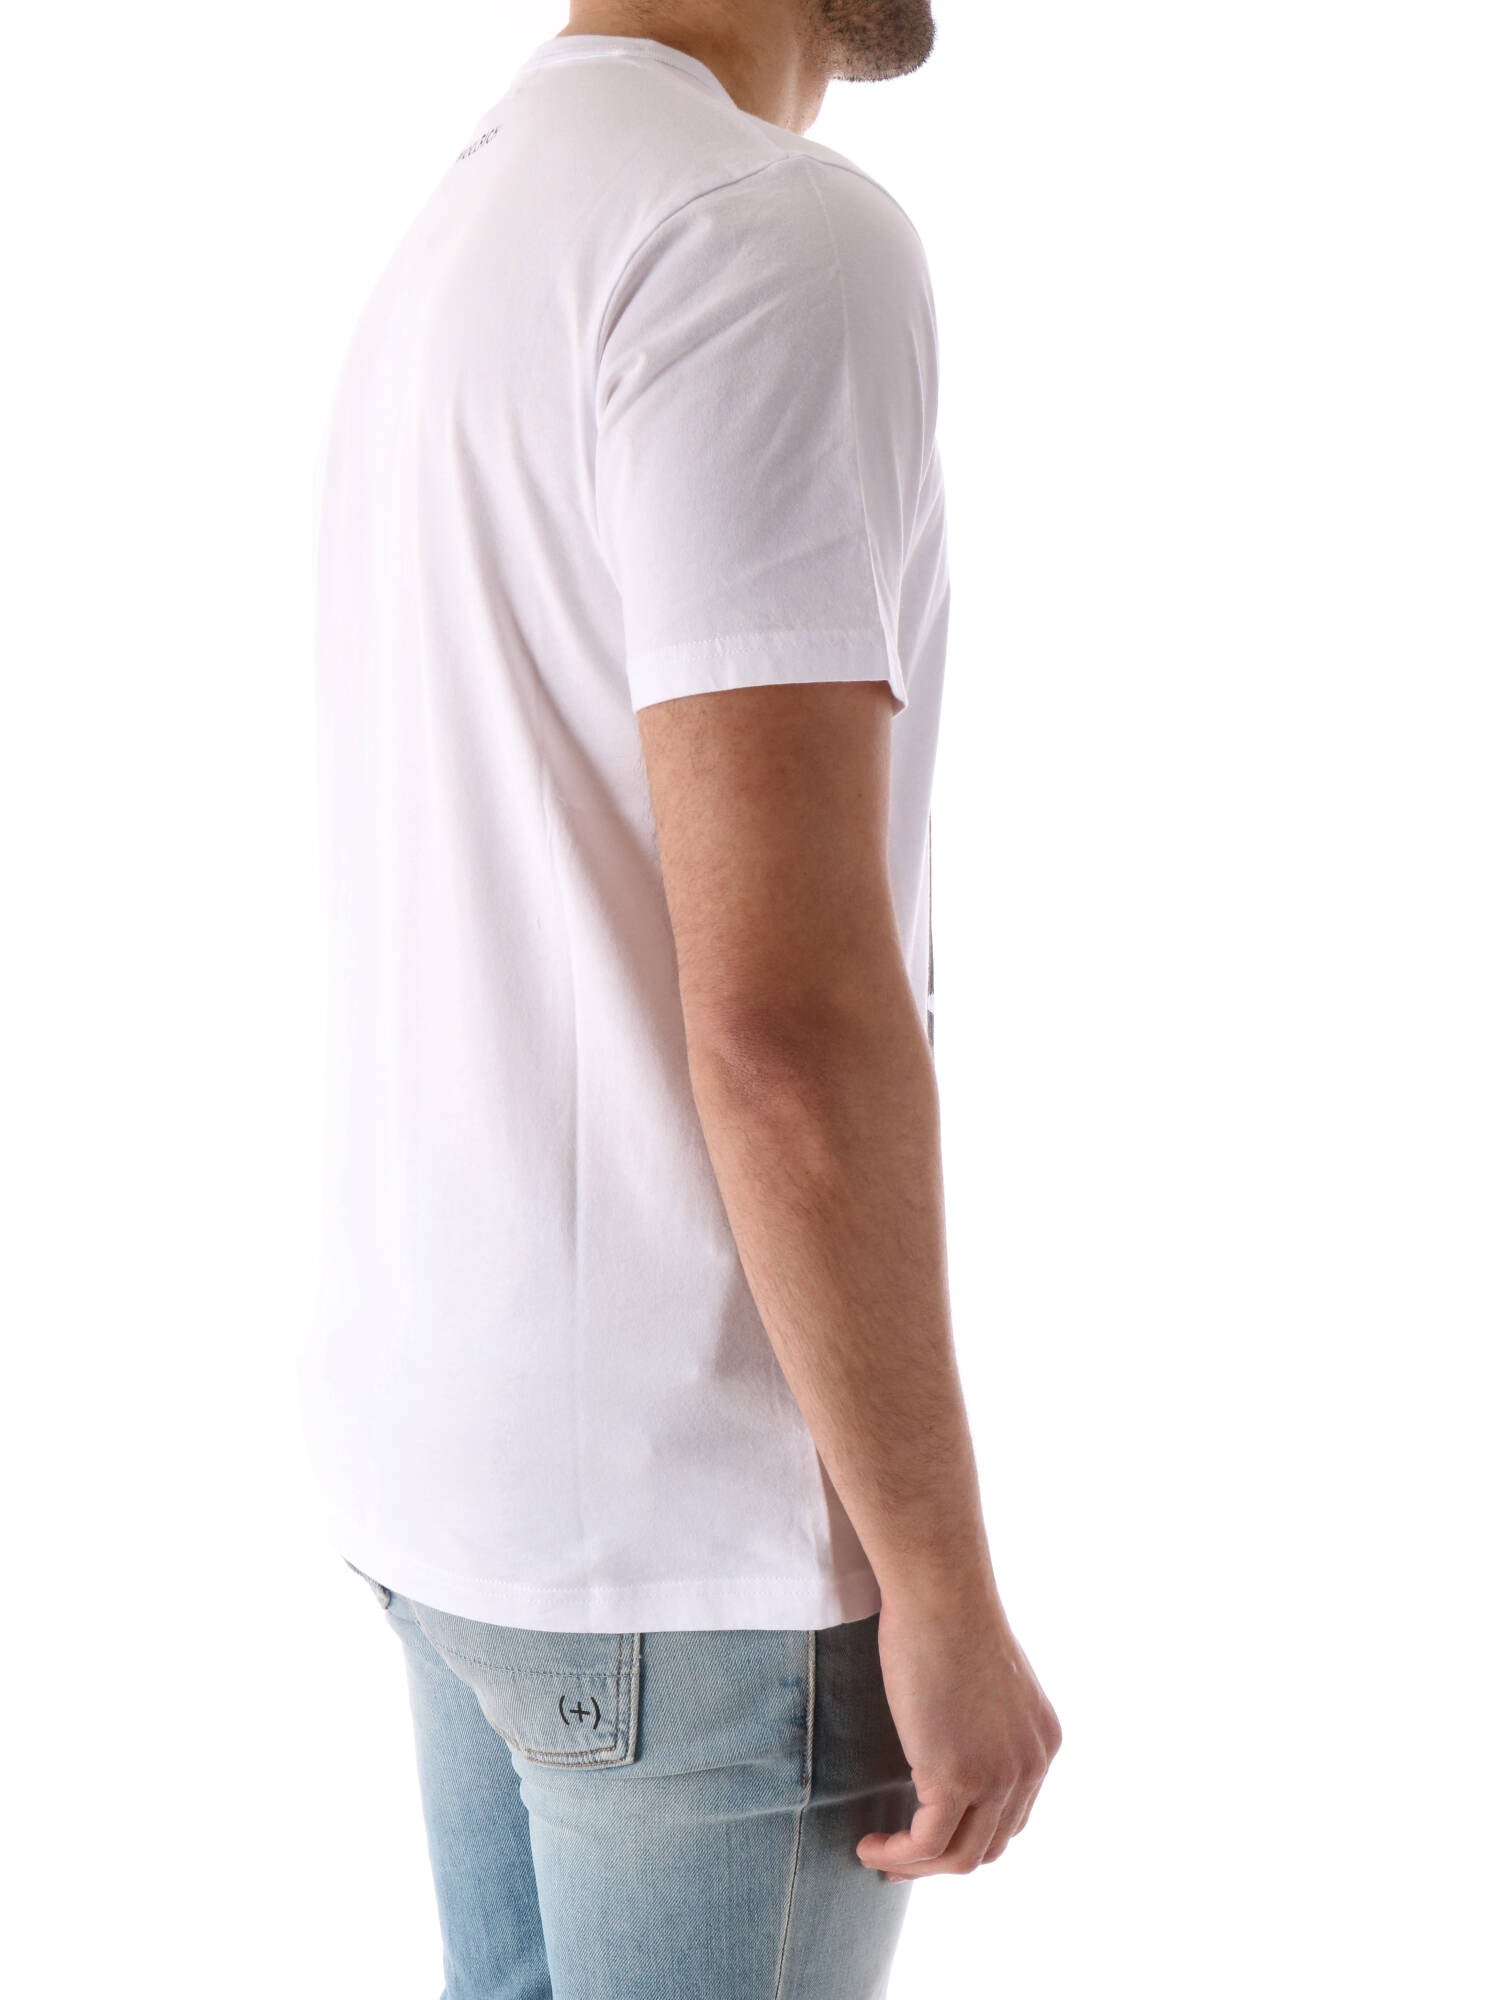 Woolrich t-shirt bianca uomo con stampa ad acqua